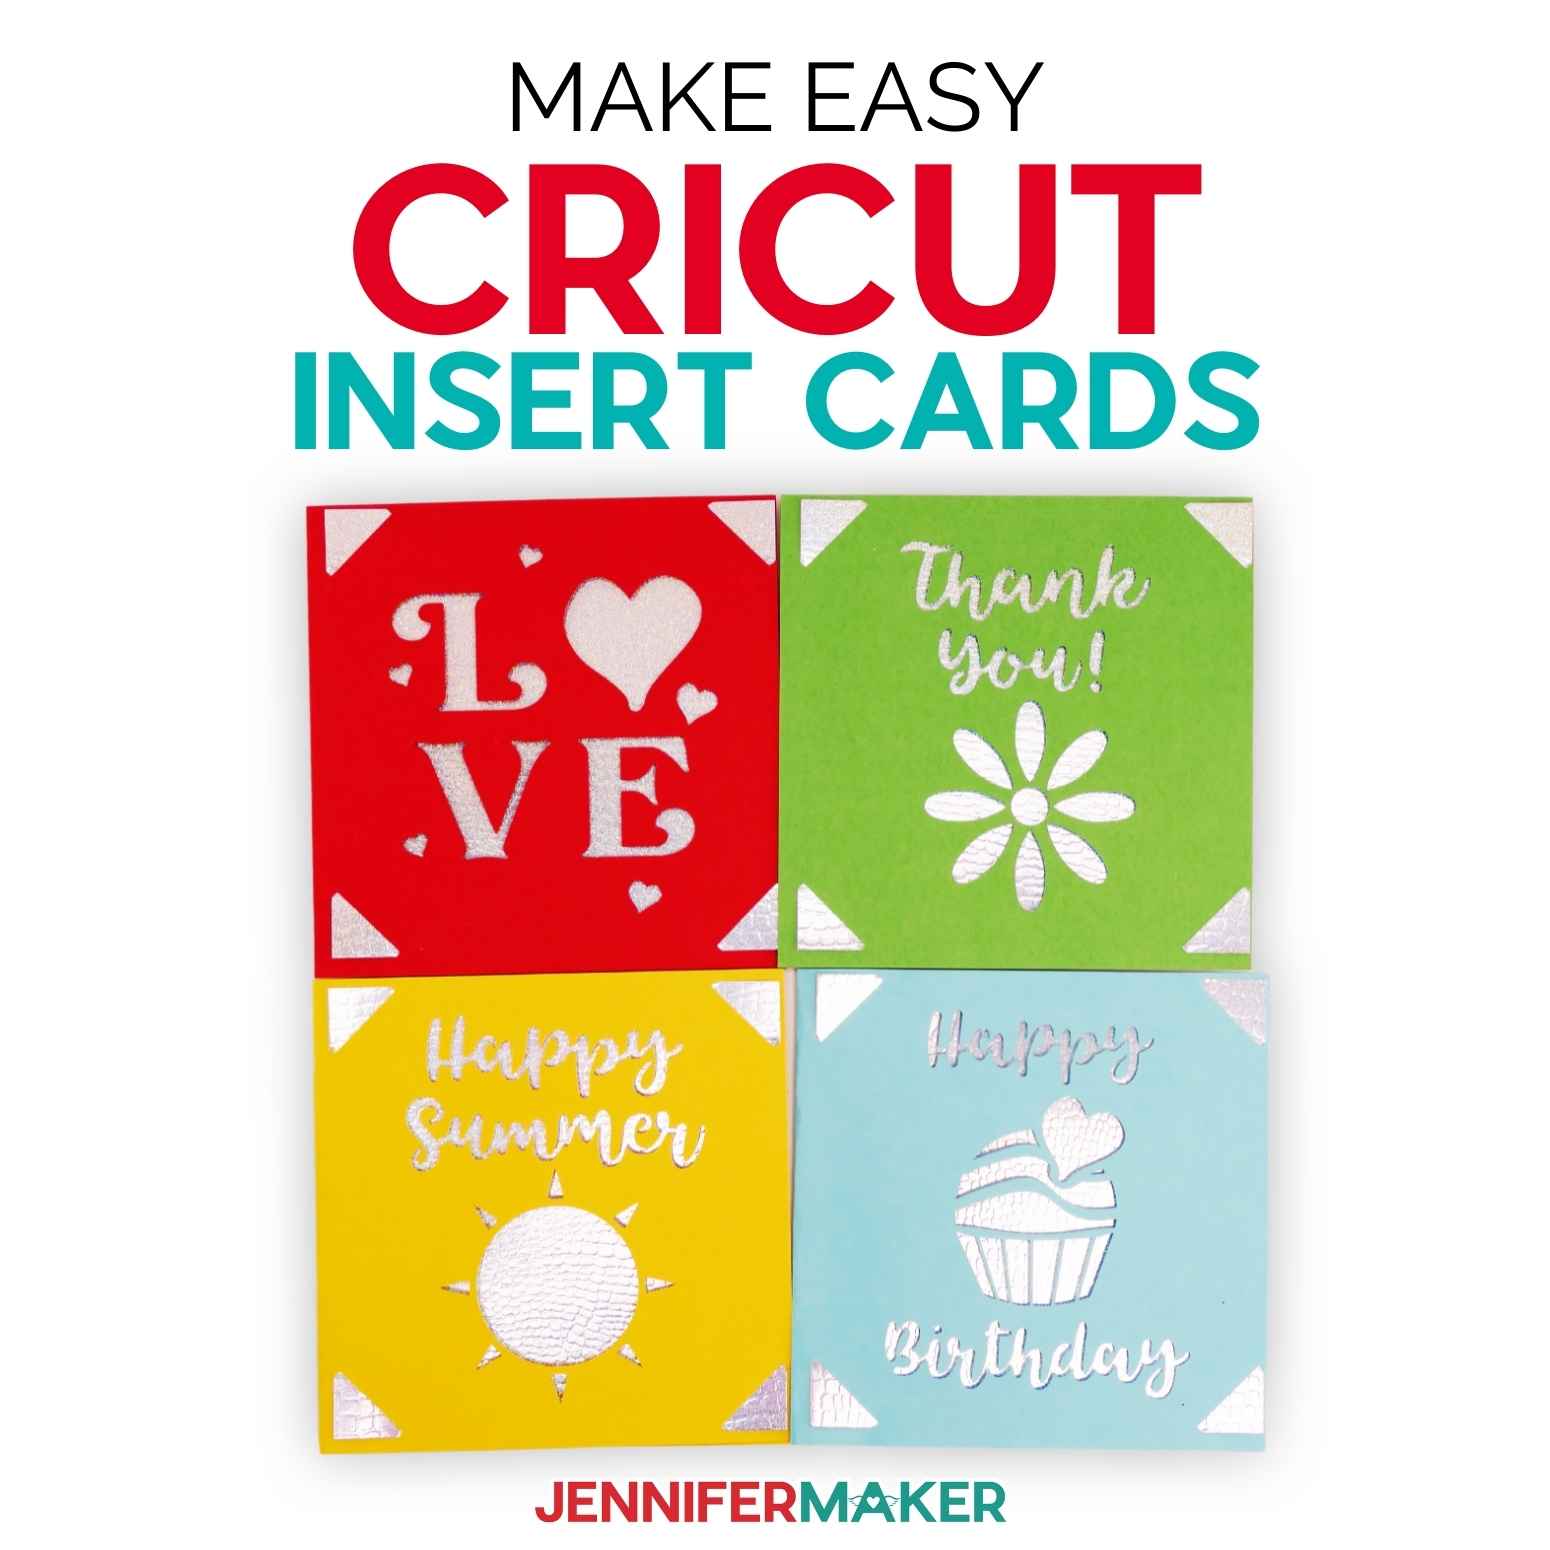 Cricut Insert Cards: 2 x 2 Mat Designs and Tips